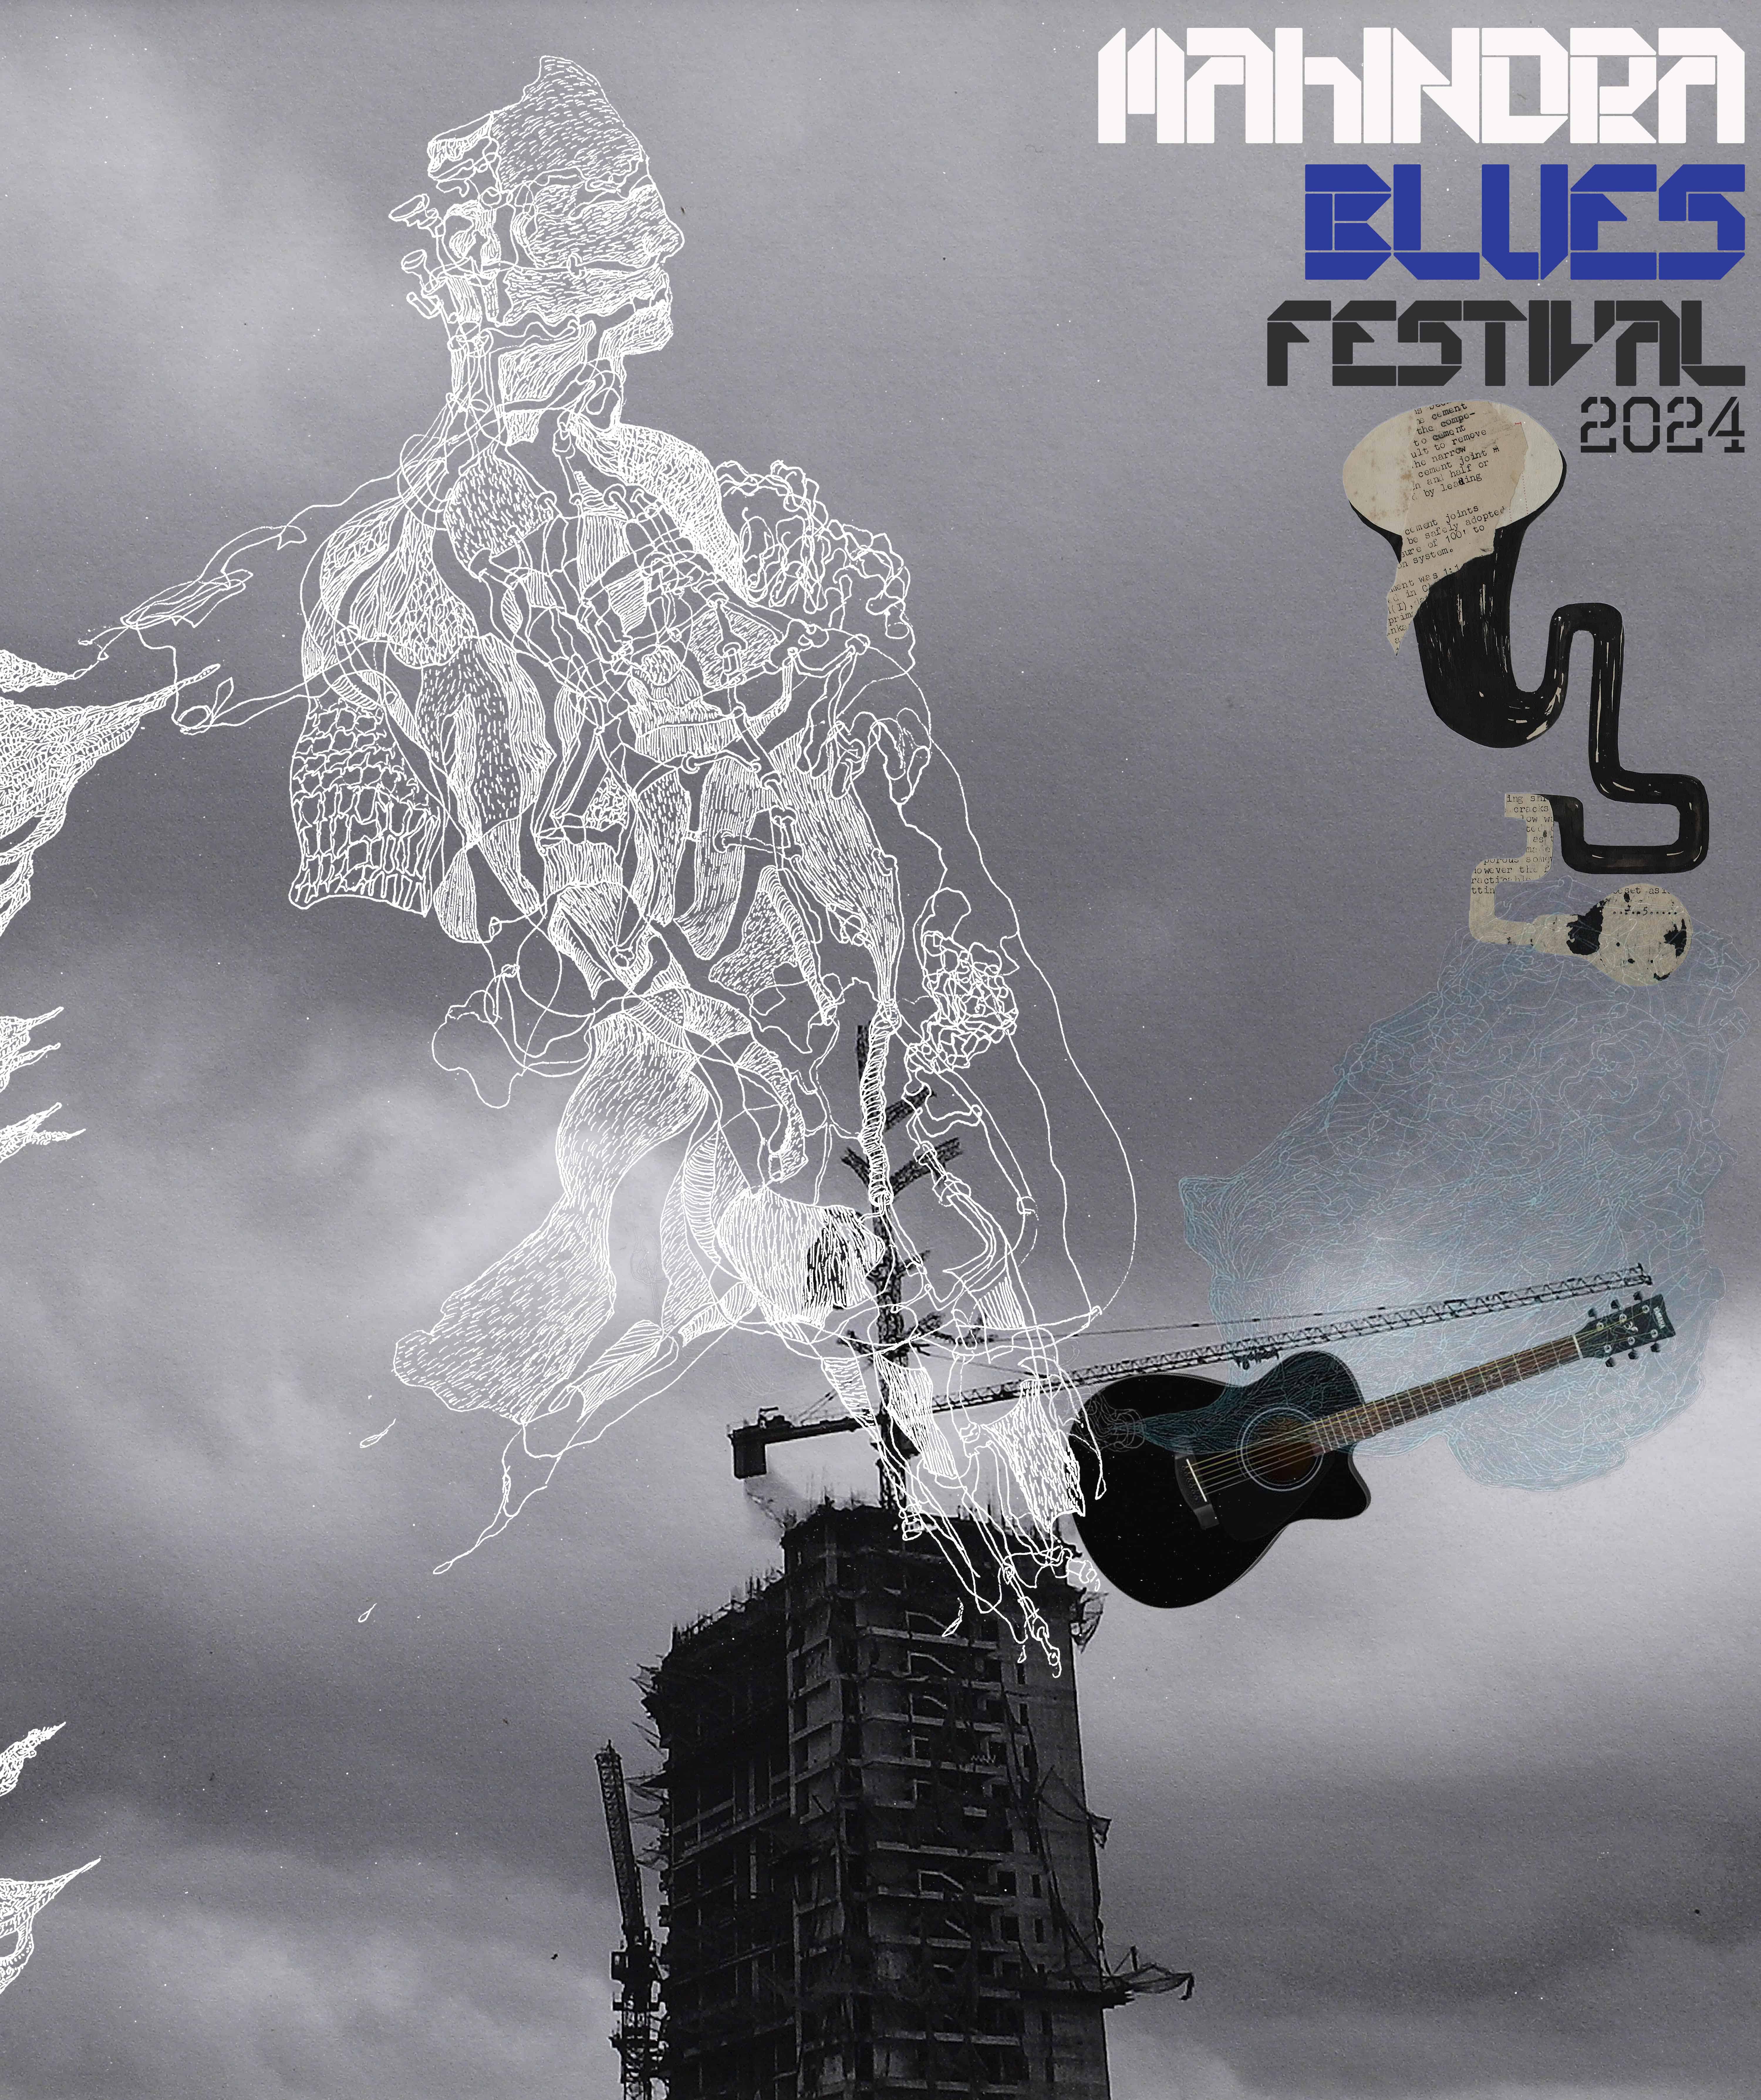 Mahindra Blues Festival